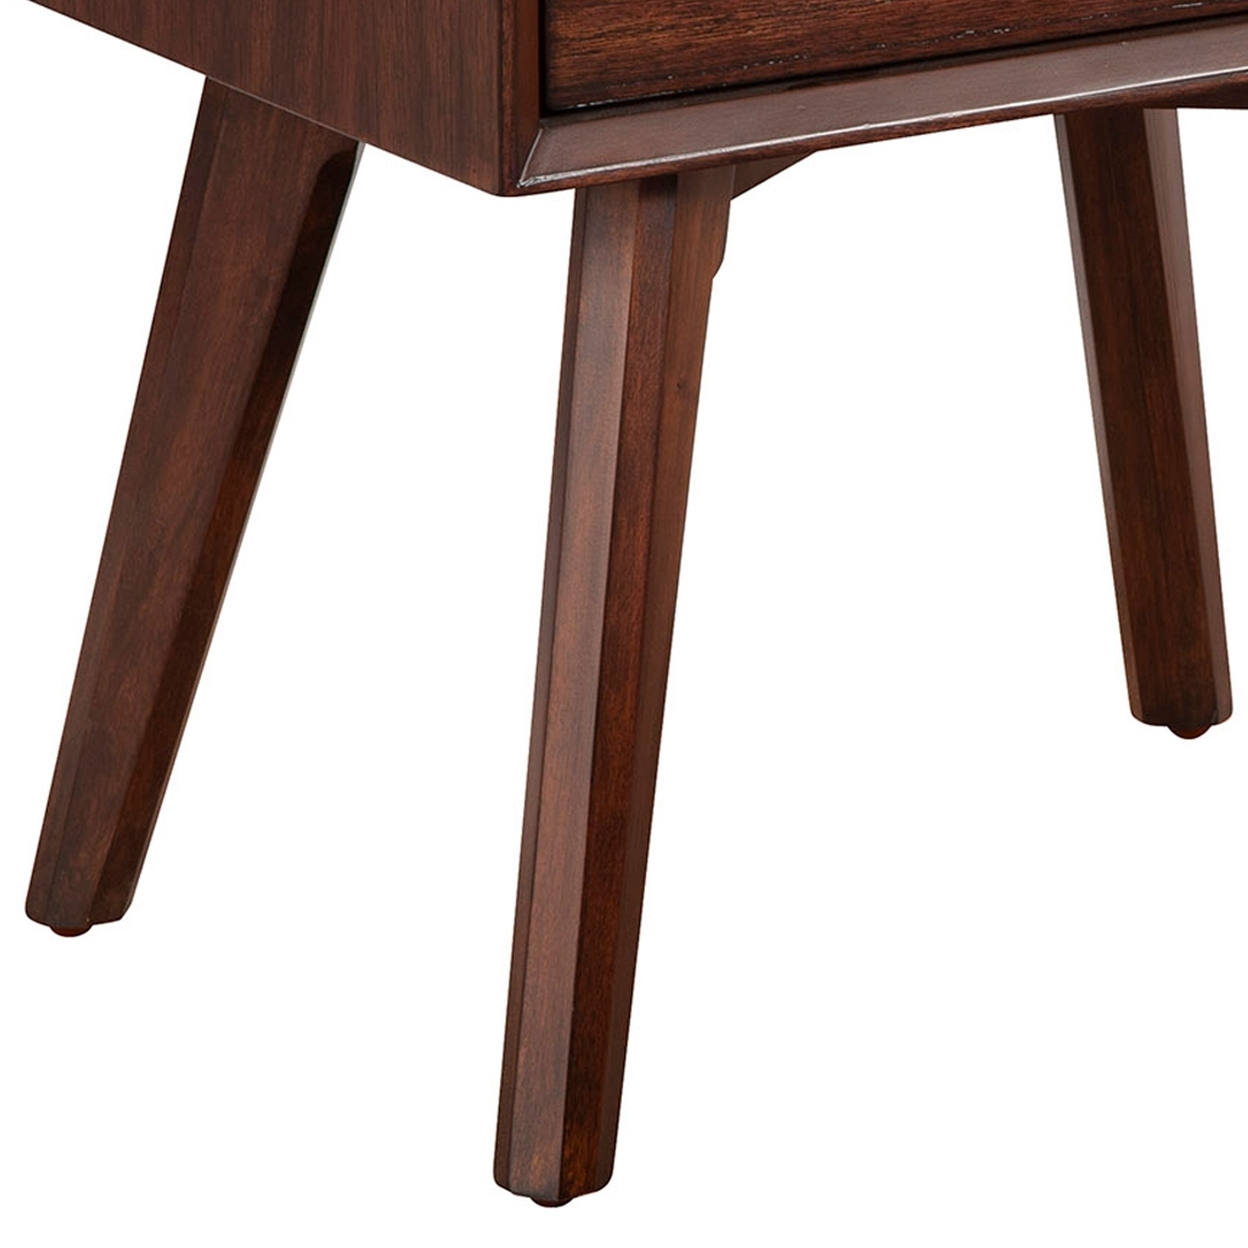 25 Inch 2 Drawer Wooden Nightstand With Bar Pulls, Brown- Saltoro Sherpi